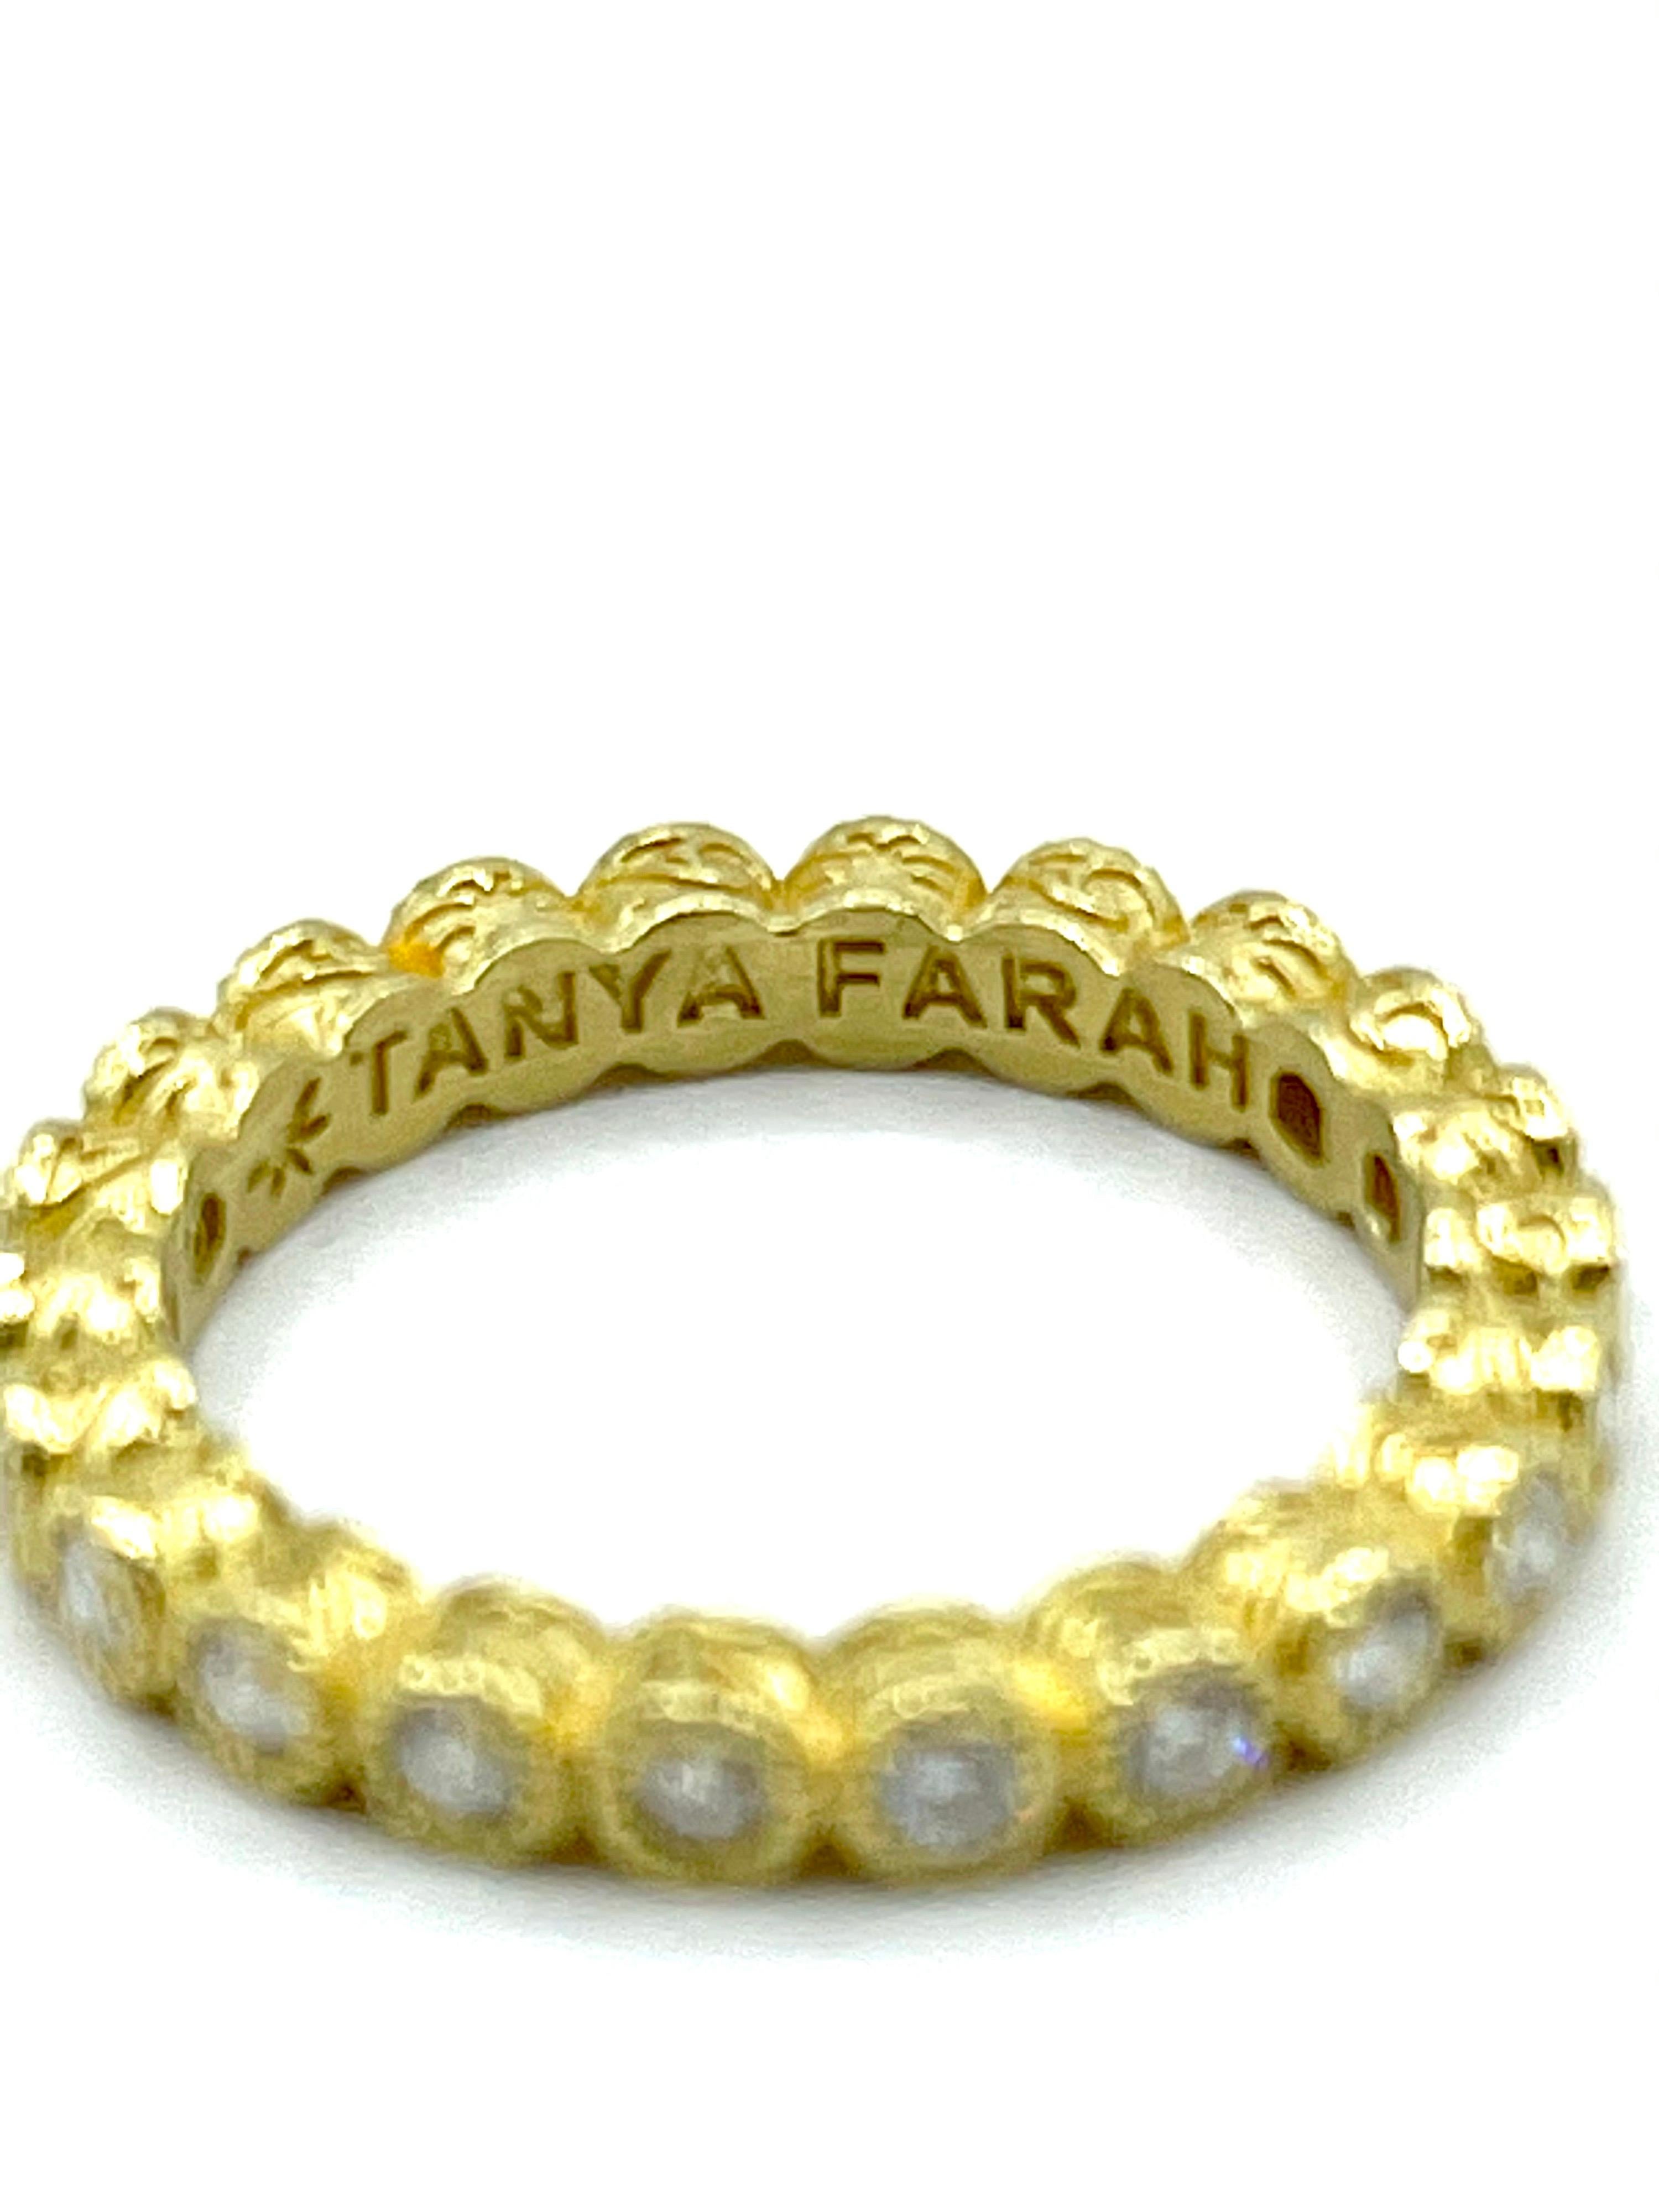 Round Cut Tanya Farah 0.65 Carat Bezel Set 18 Karat Yellow Gold Diamond Eternity Ring